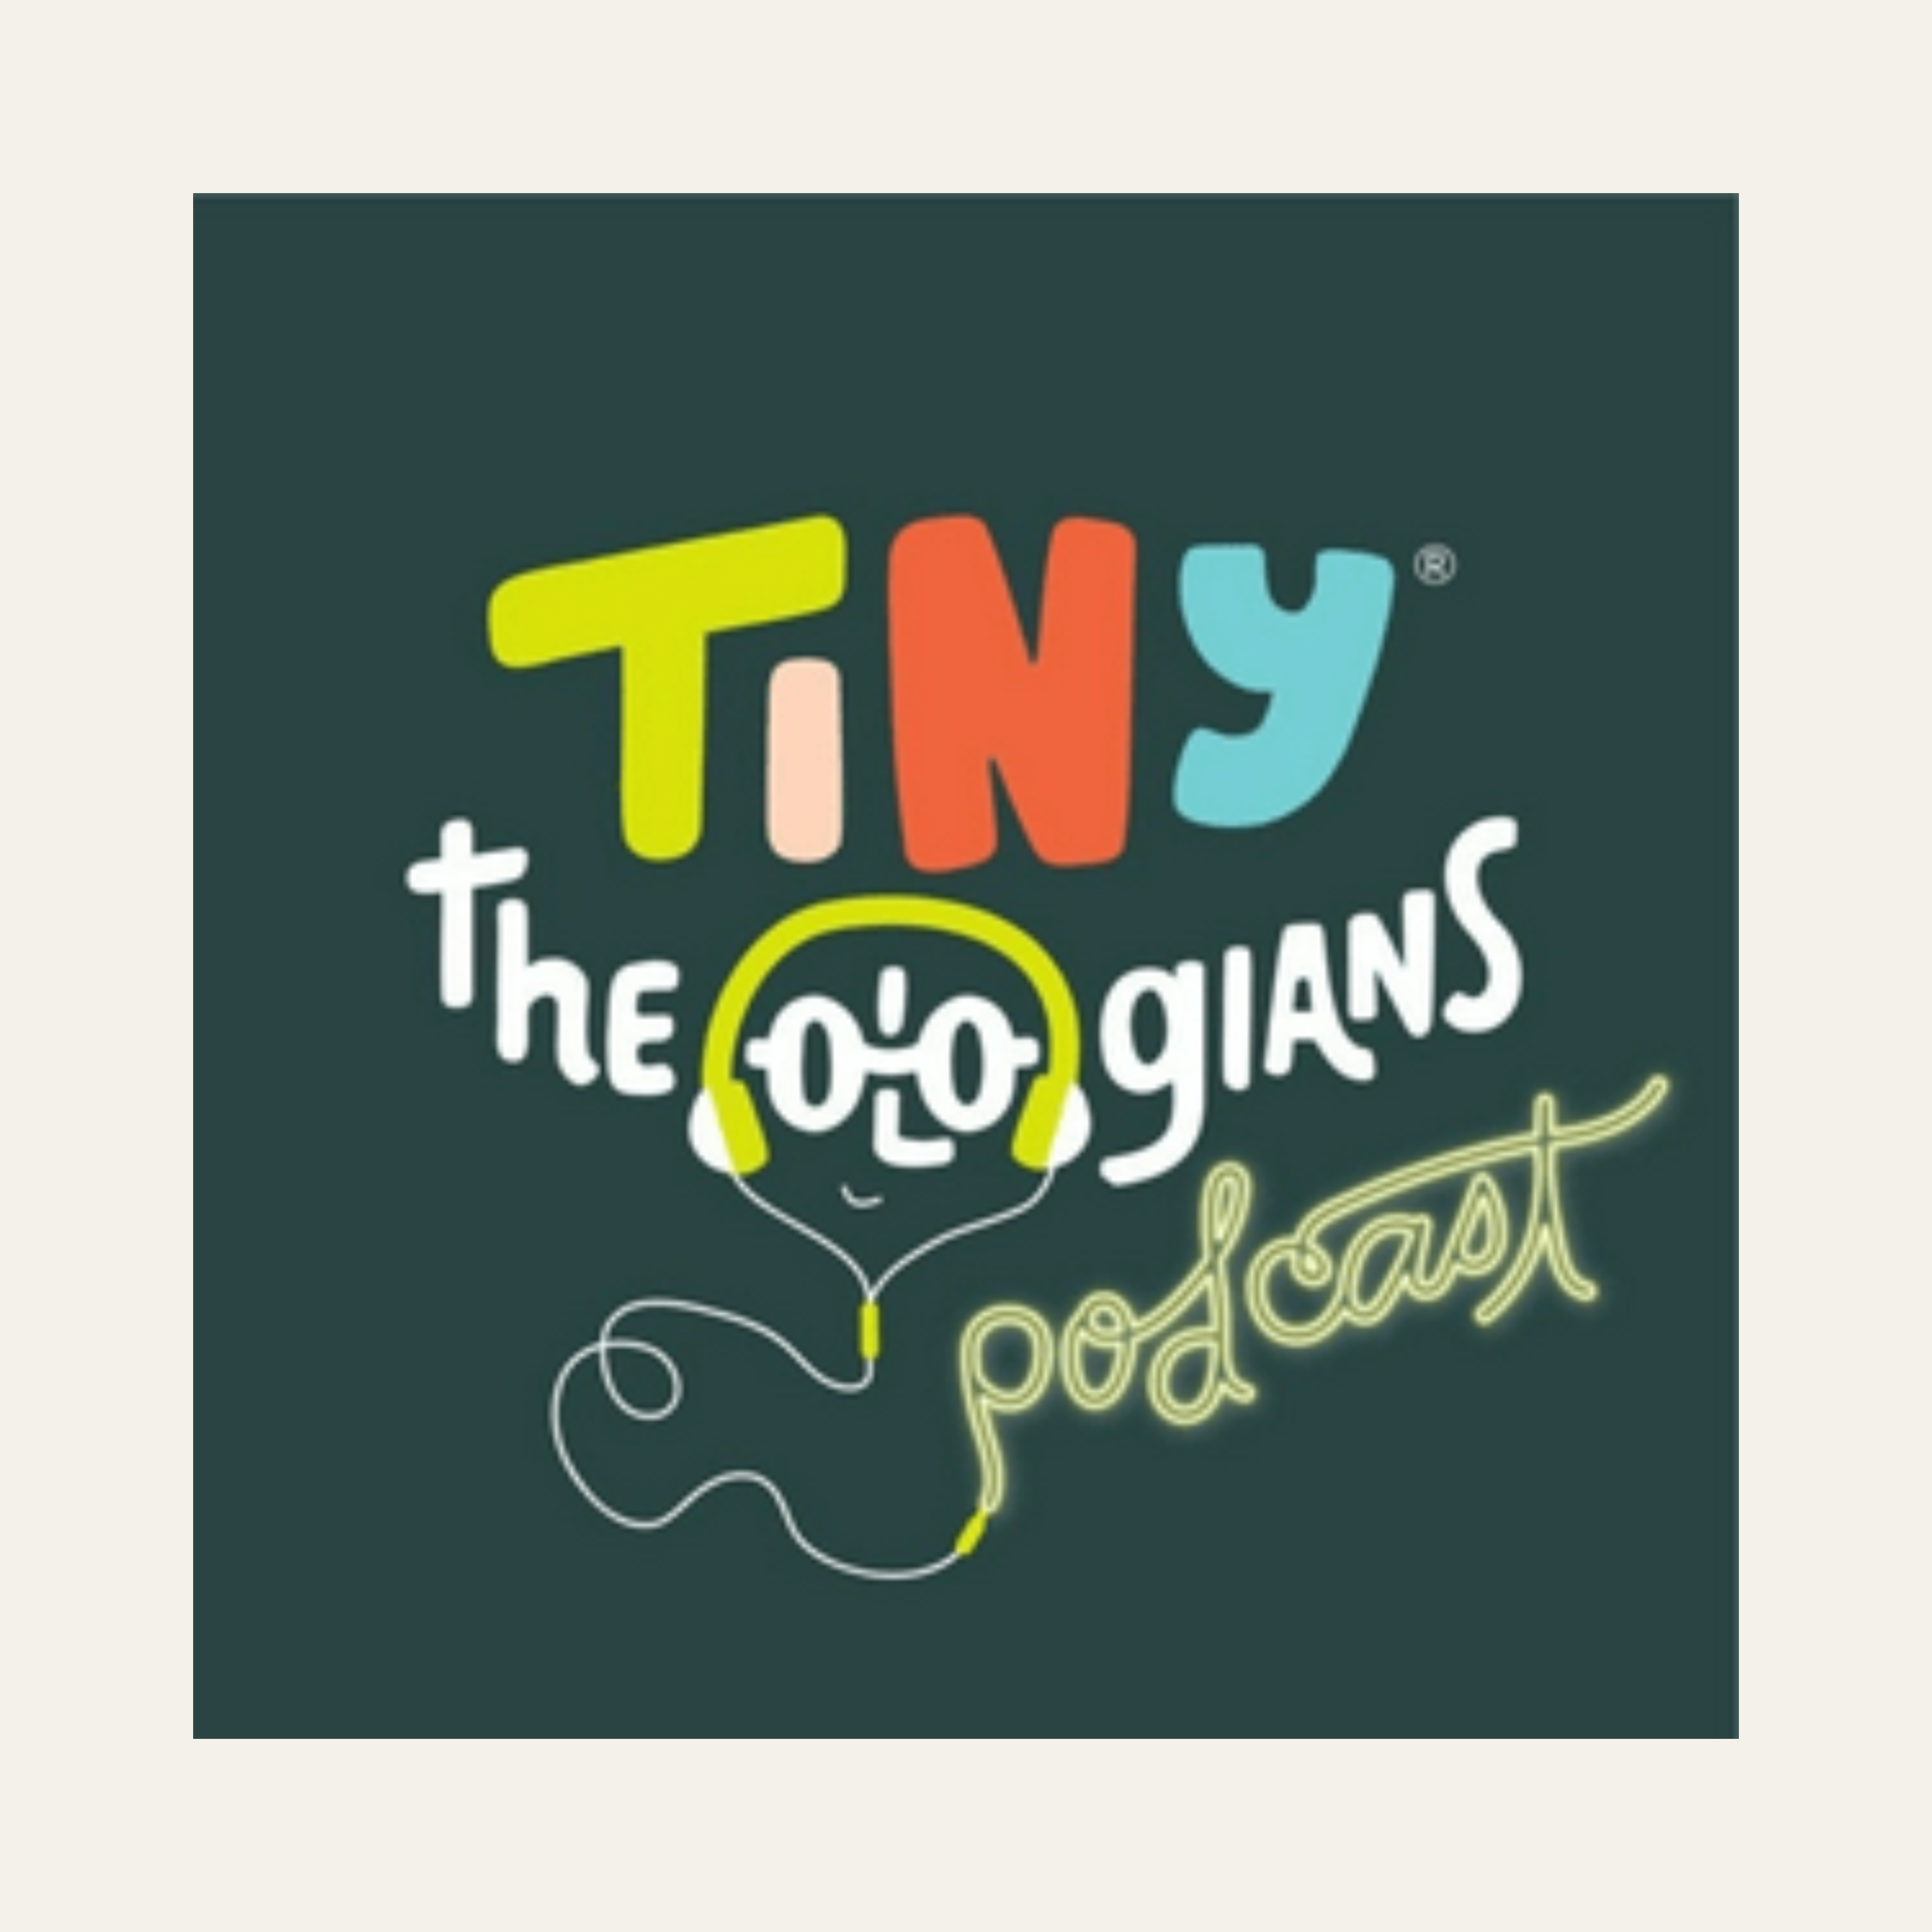 The Tiny Theologians Podcast